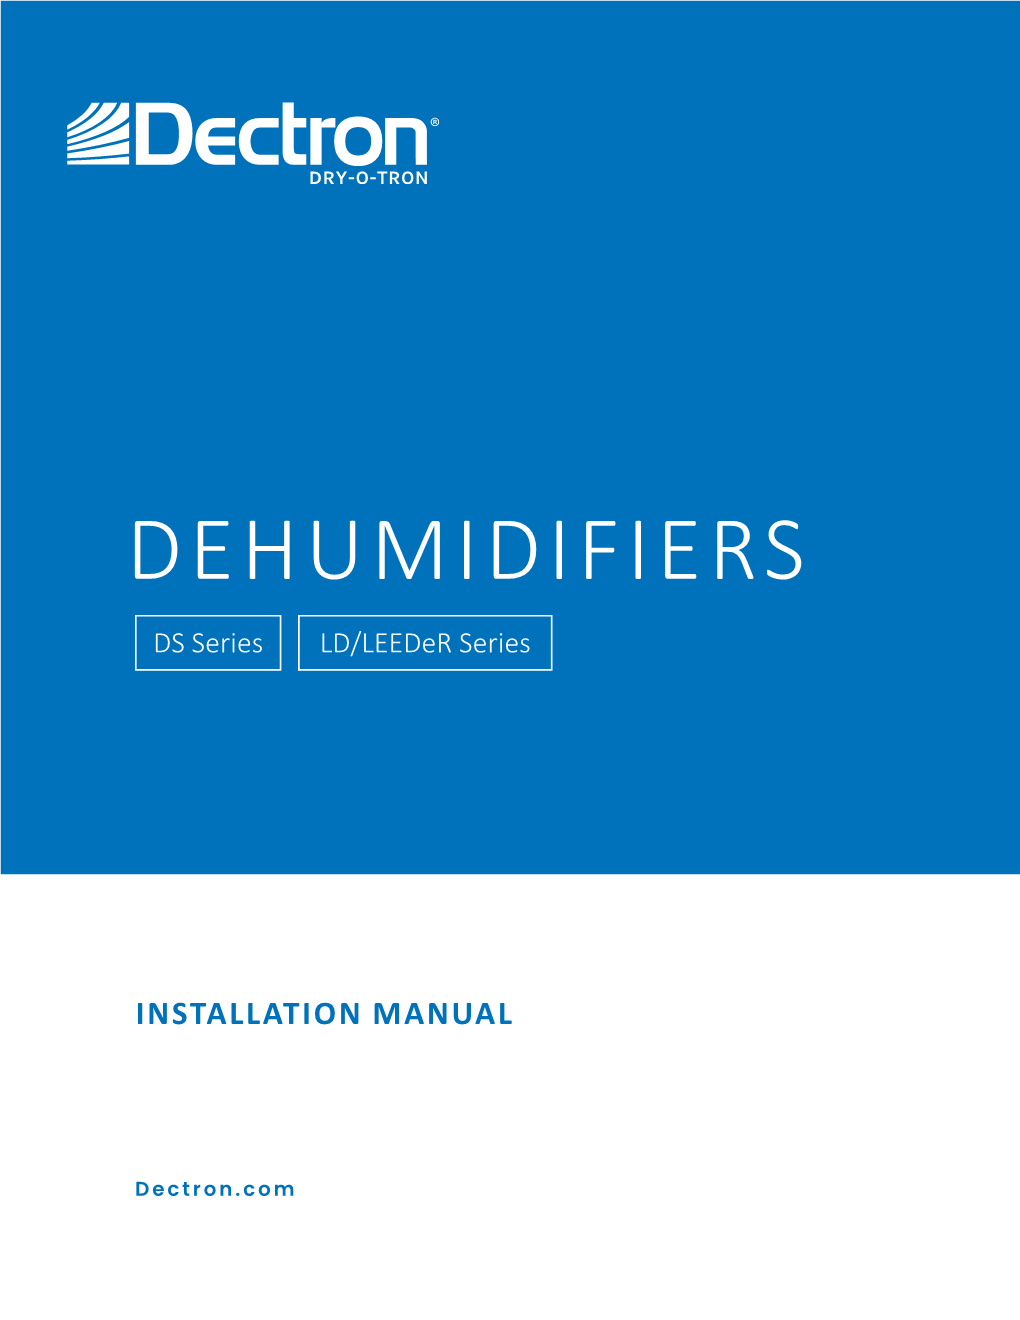 Dectron Dehumidifiers Installation Manual